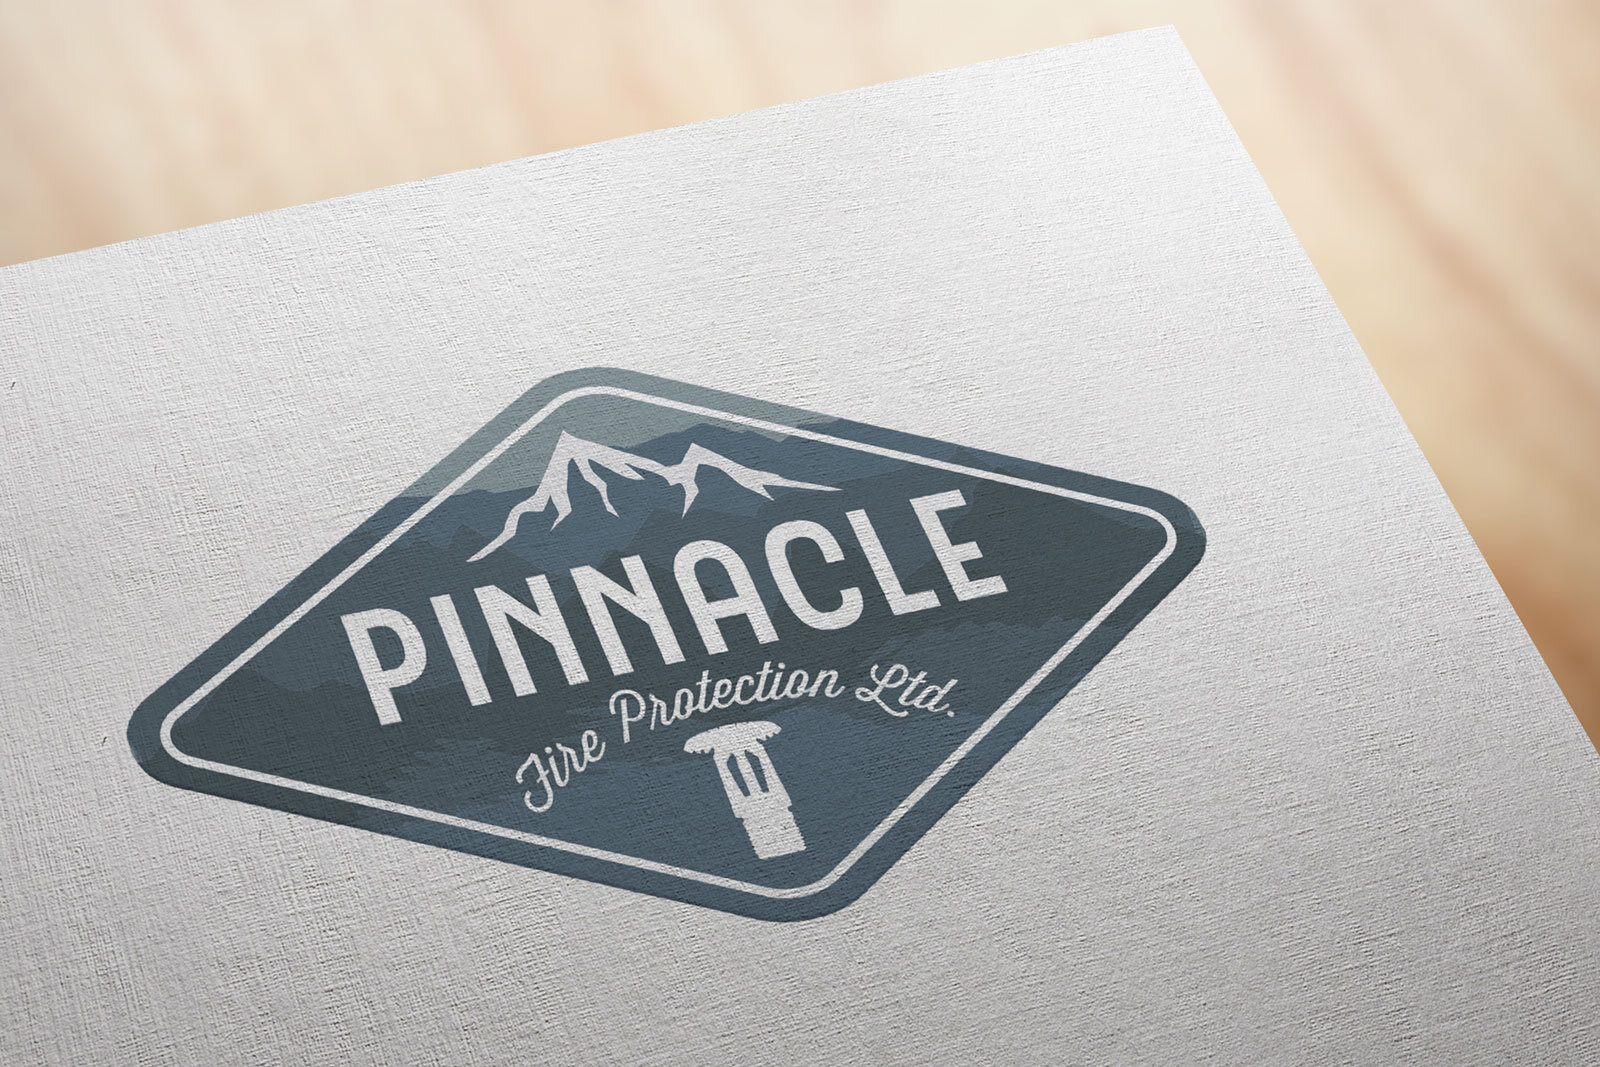 Logo Design: Pinnacle Fire Protection Ltd.